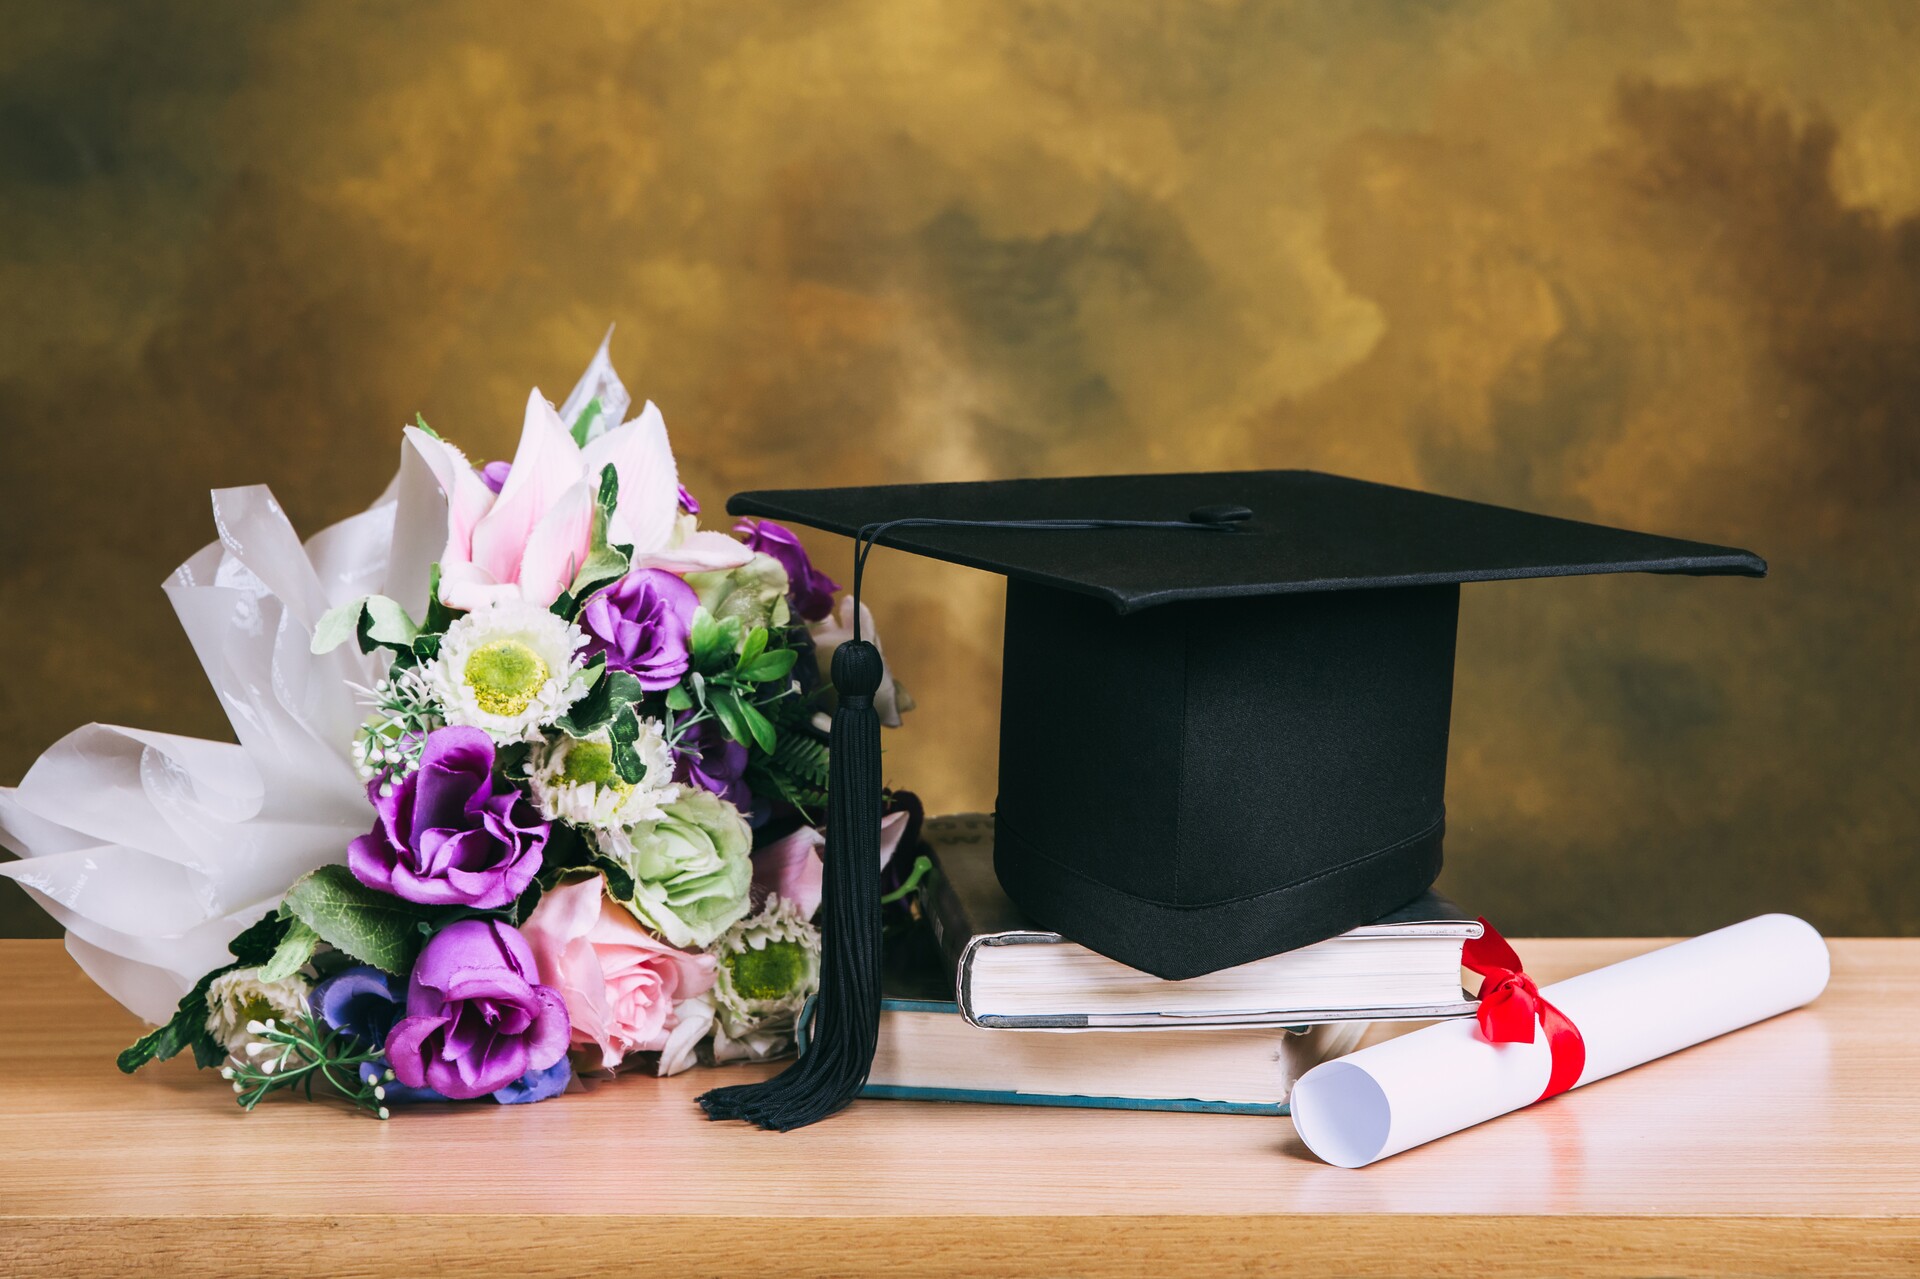 graduation-cap-hat-with-degree-paper-flower-bouquet-wood-table.jpg